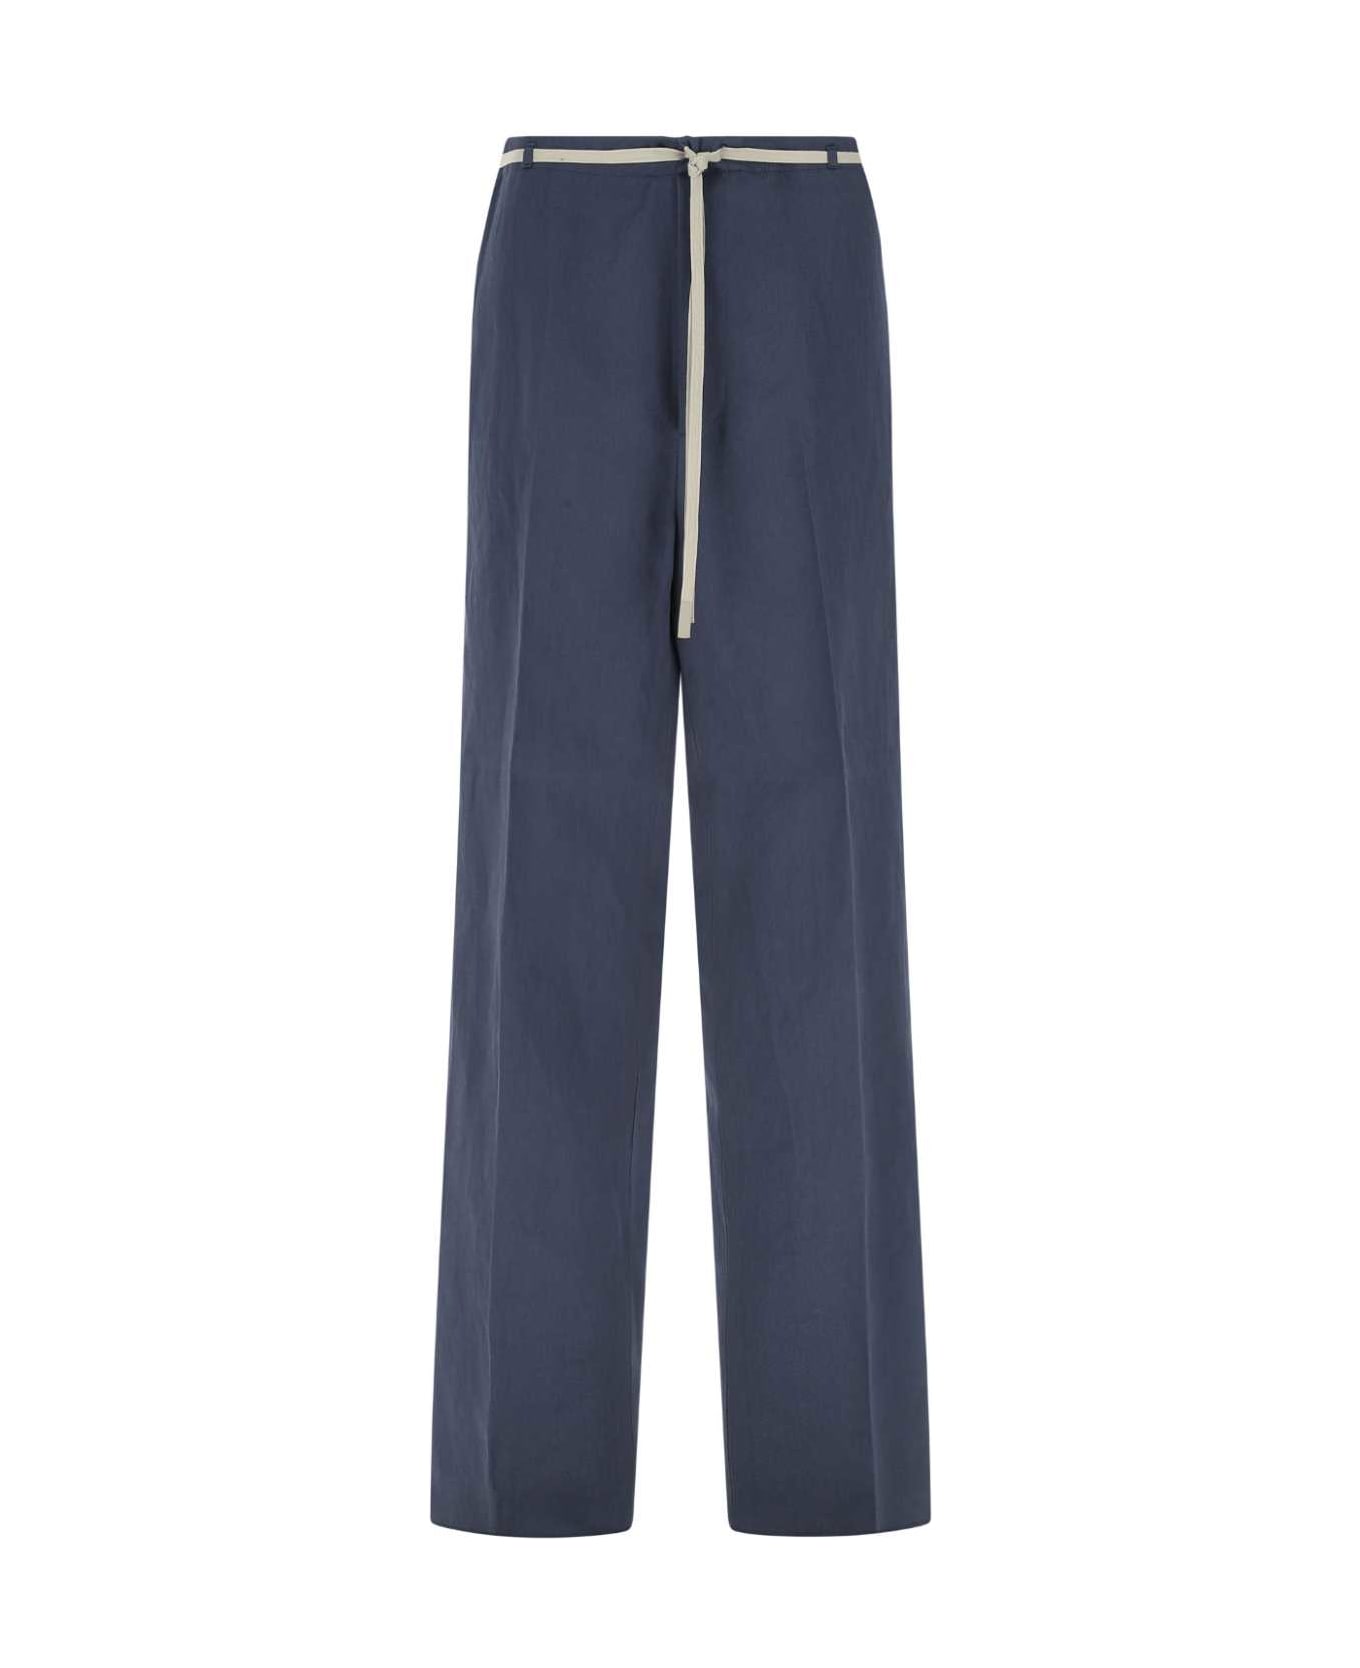 Zegna Navy Blue Cotton Blend Wide-leg Pant - NAVY ボトムス